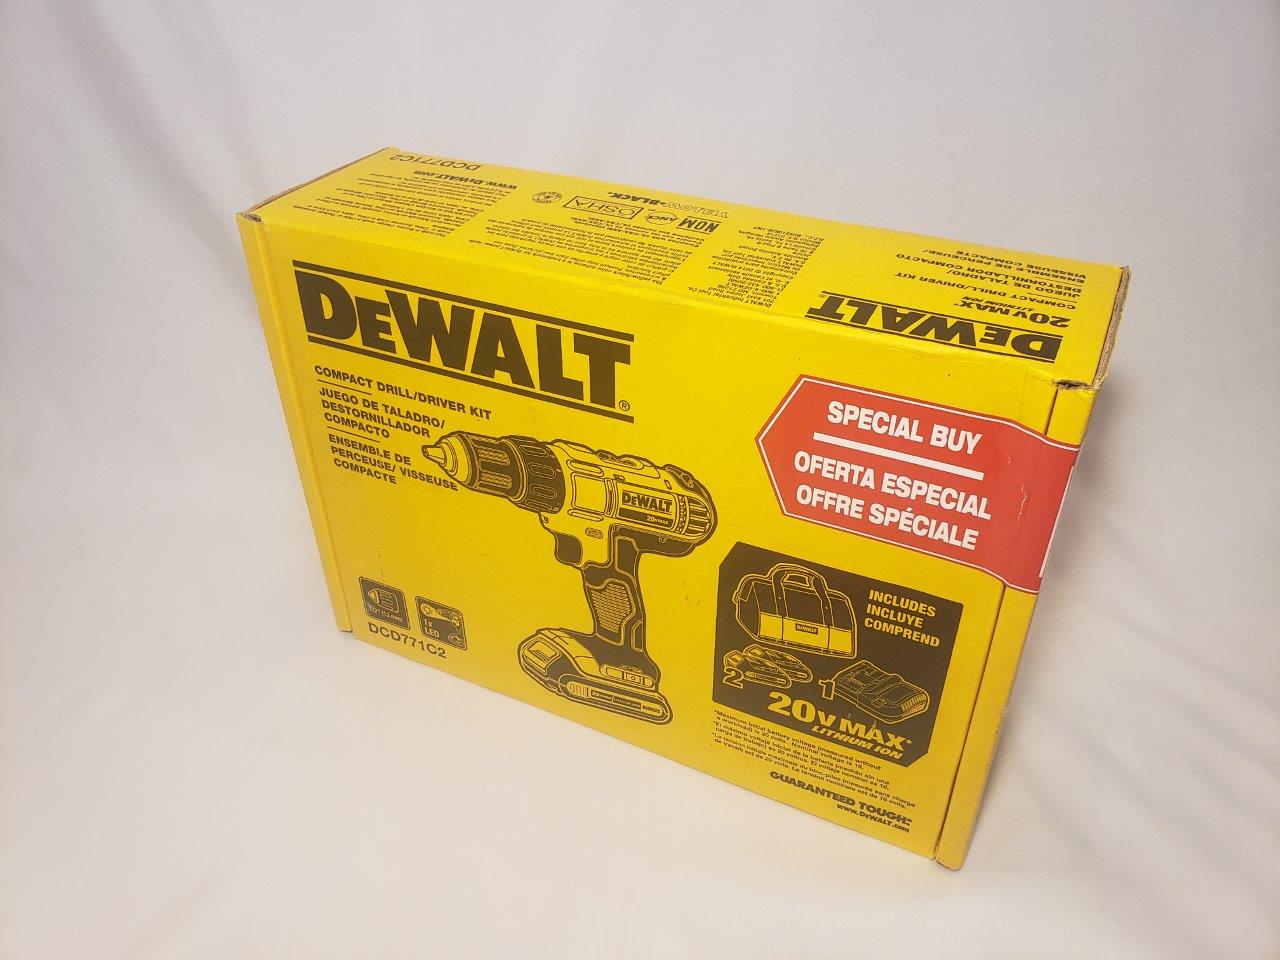 DEWALT 20V MAX Cordless Drill / Driver Kit, Compact, 1/2-Inch (DCD771C2)